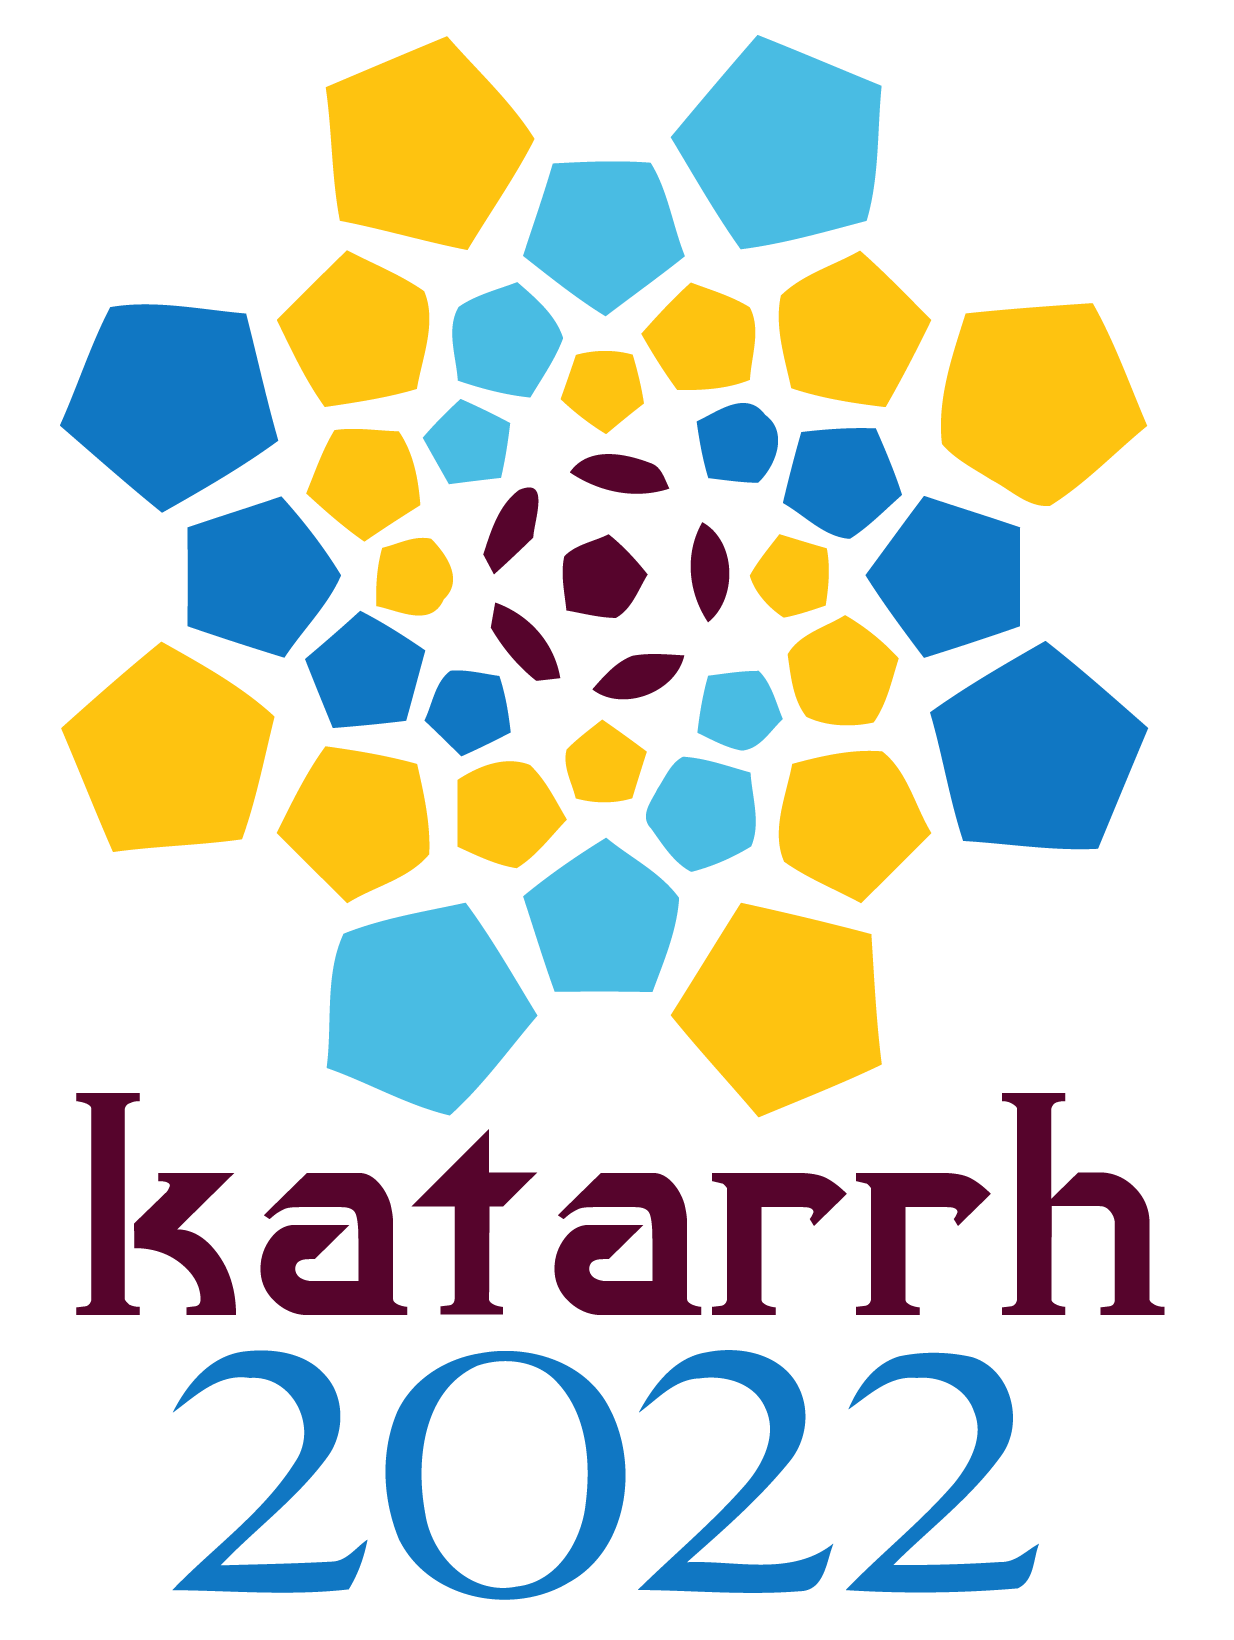 Fussball-WM-Katar-Katarrh-Qatar_2022_FIFA_logo